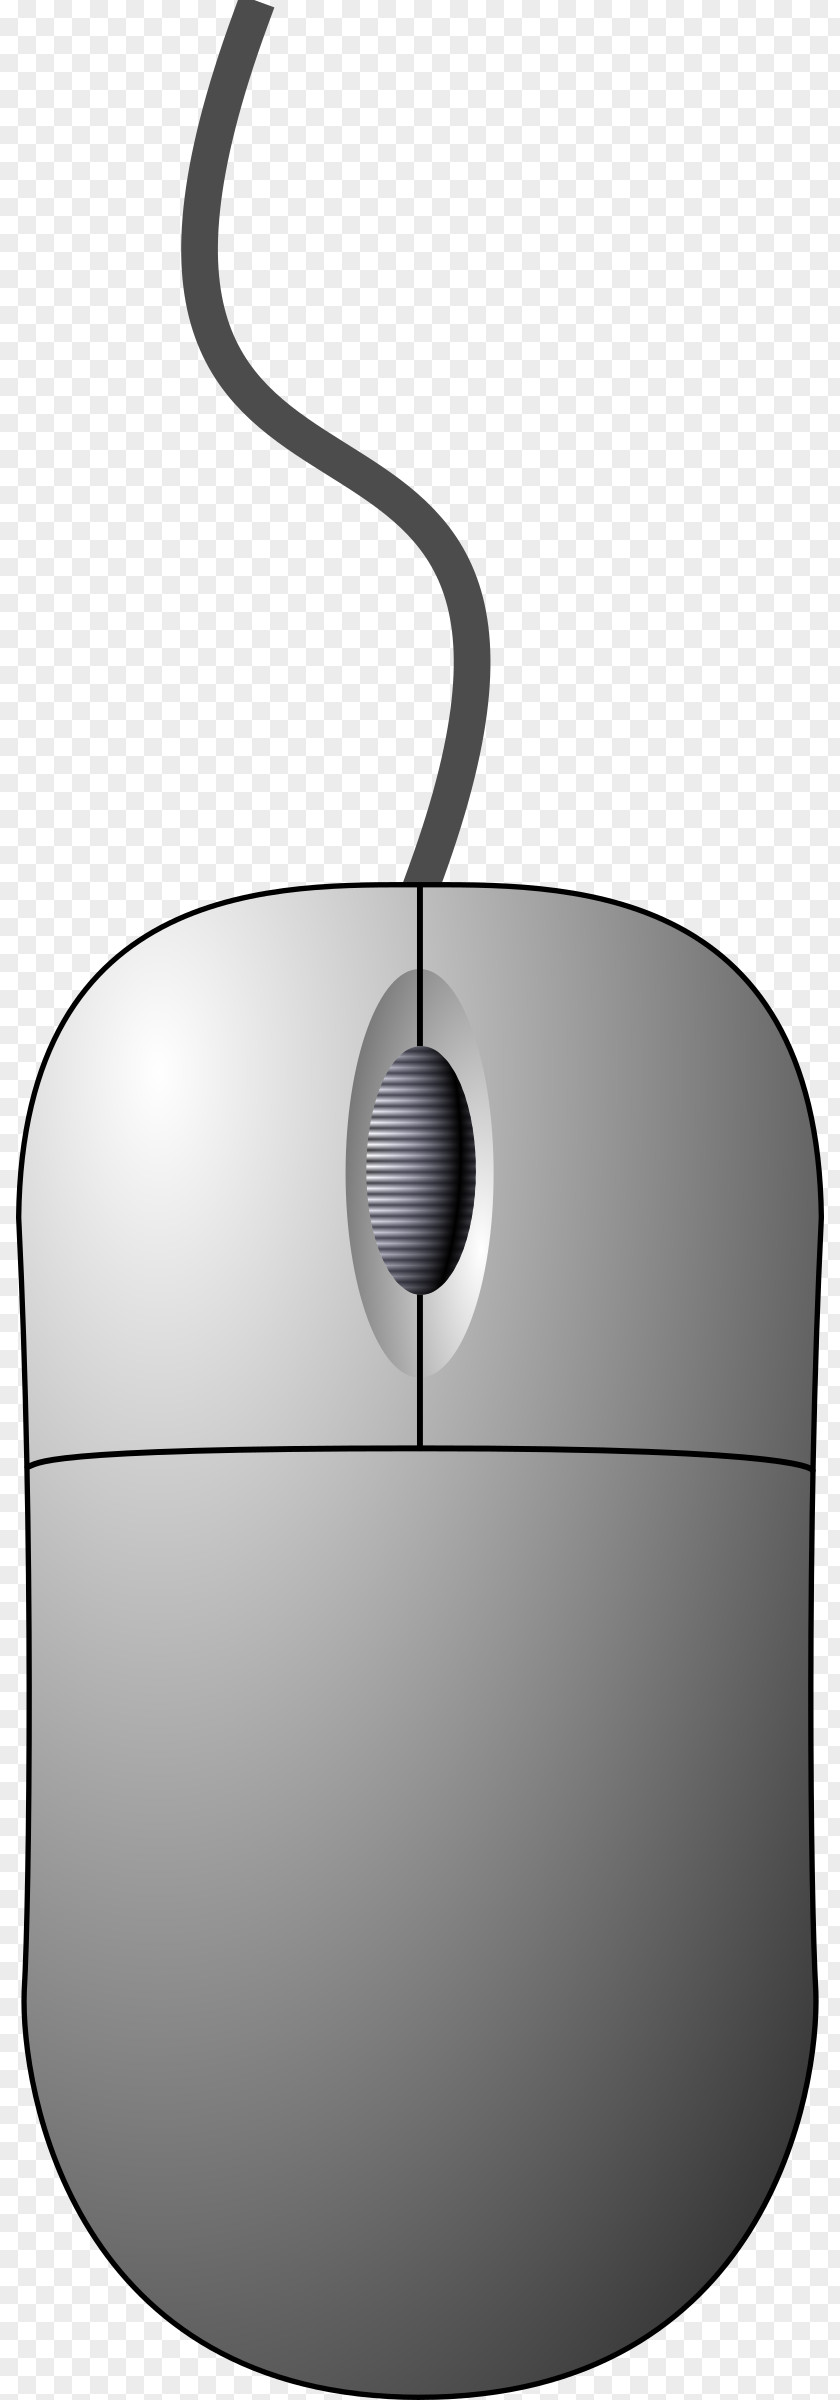 Computer Mouse Clip Art PNG